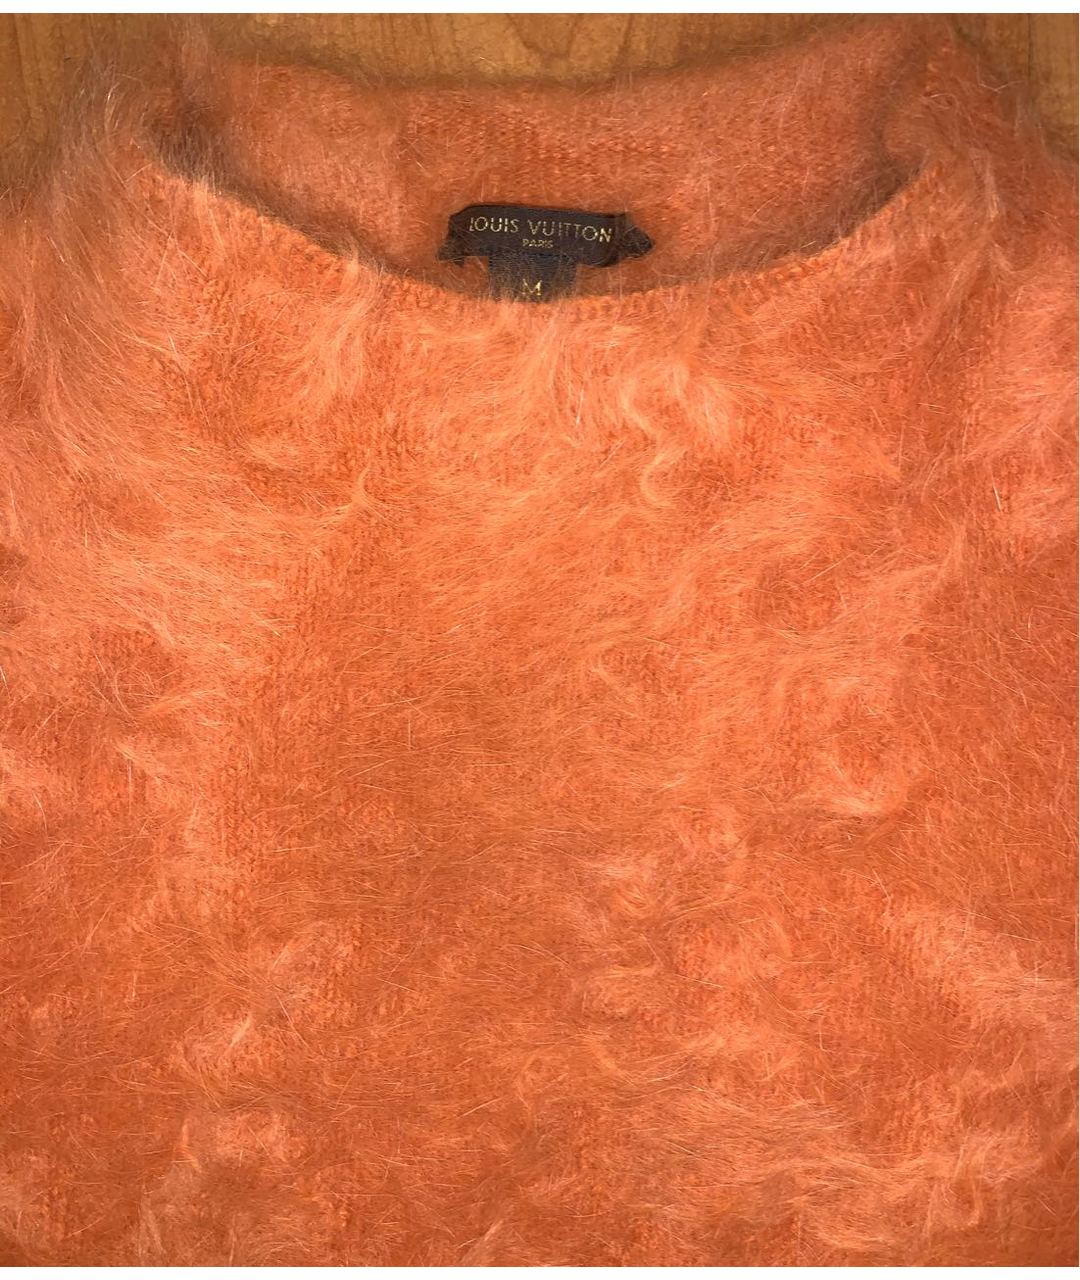 LOUIS VUITTON PRE-OWNED Коралловый меховой джемпер / свитер, фото 3